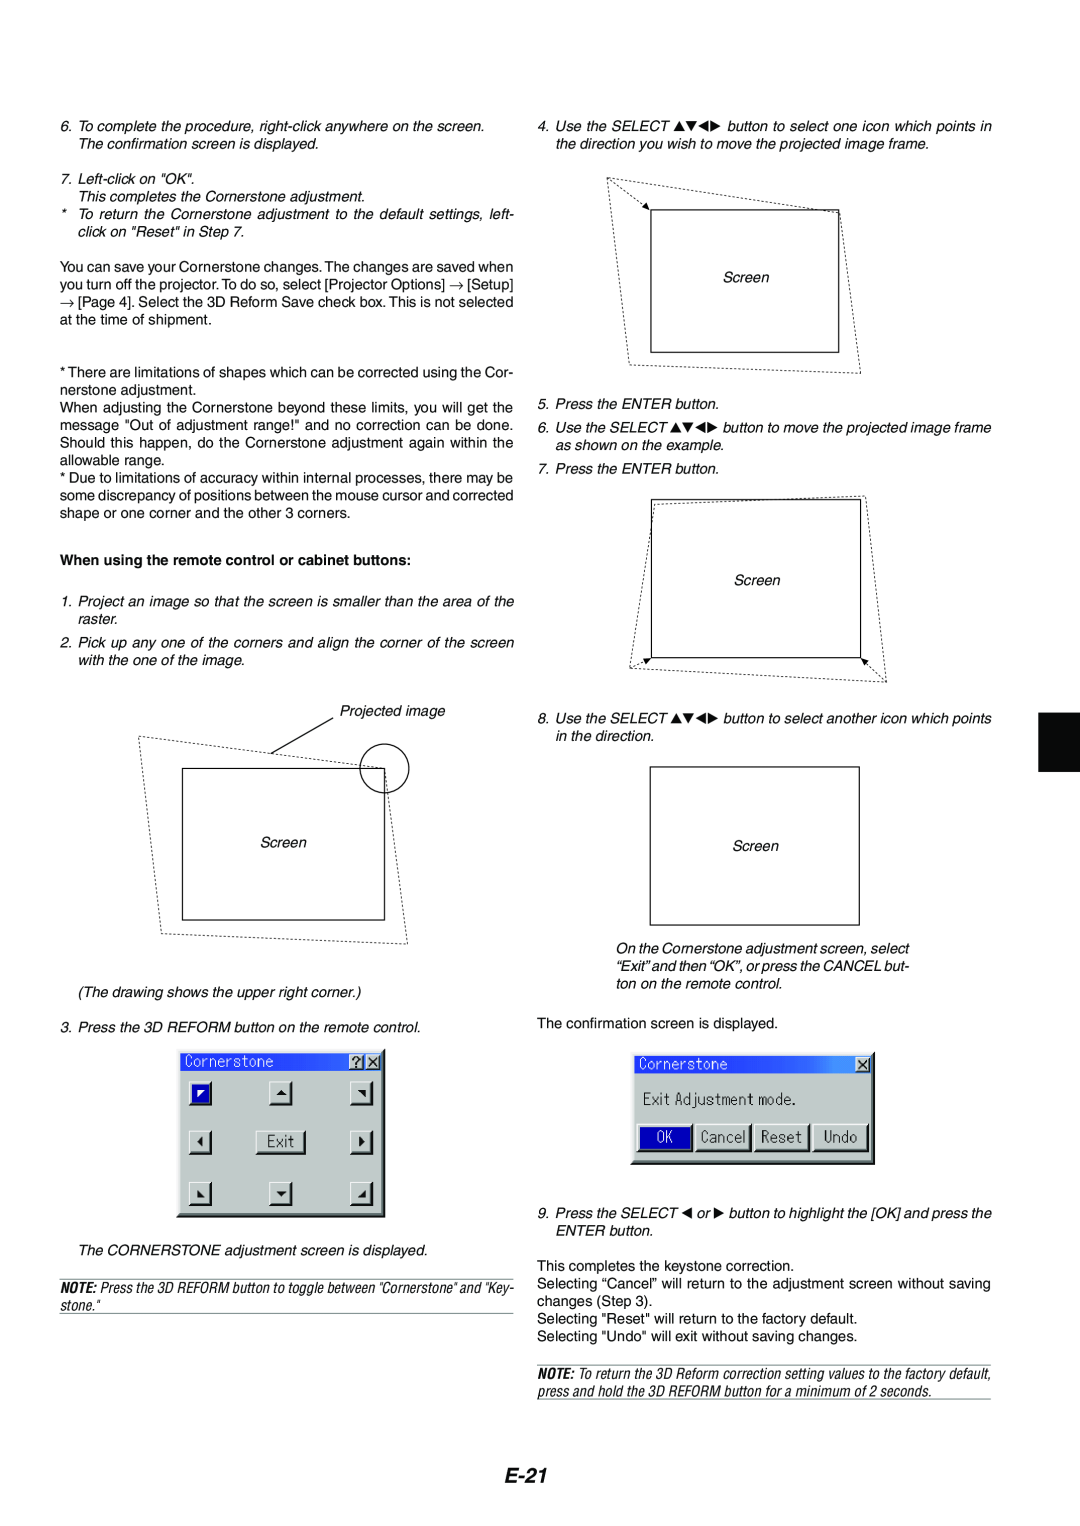 NEC MT1065/MT1060 user manual E-21, When using the remote control or cabinet buttons 